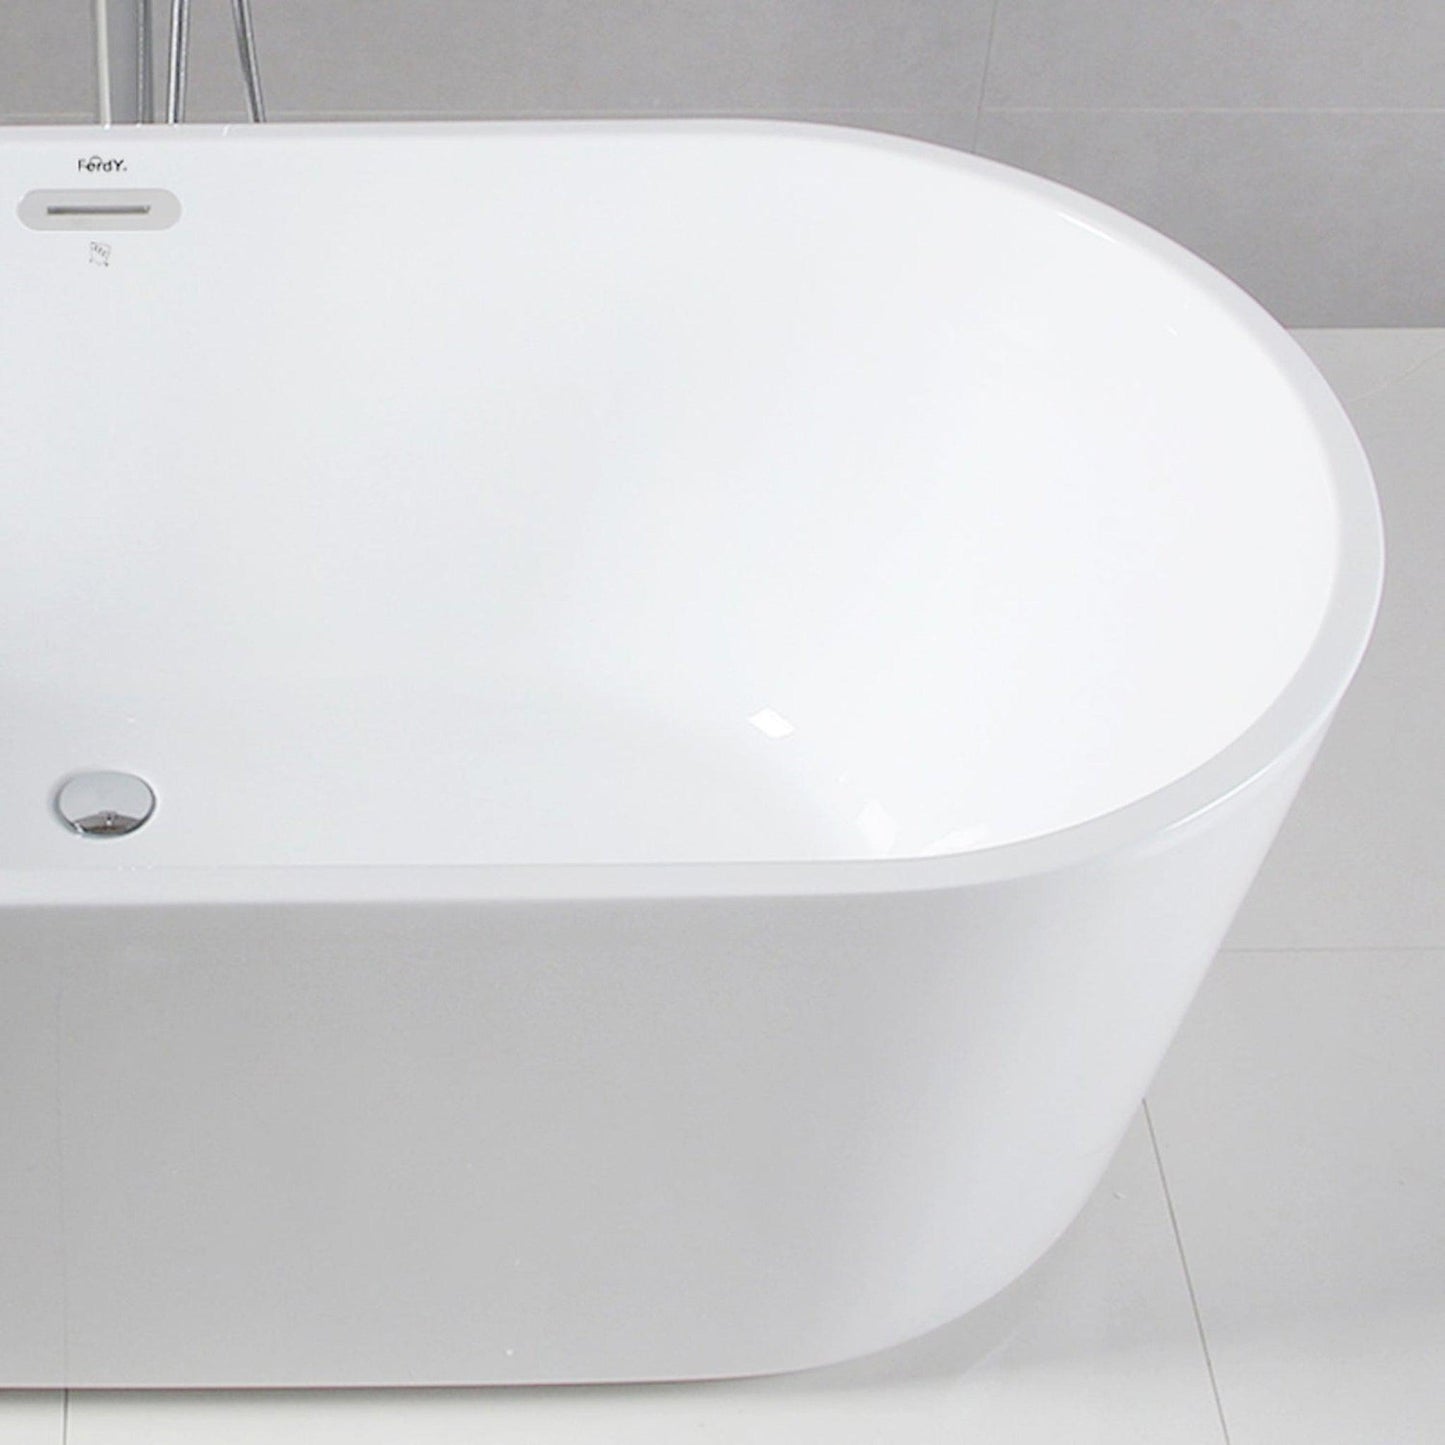 FerdY Shangri-La 59" x 30" Oval Glossy White Acrylic Freestanding Double Slipper Soaking Bathtub With Chrome Drain and Overflow